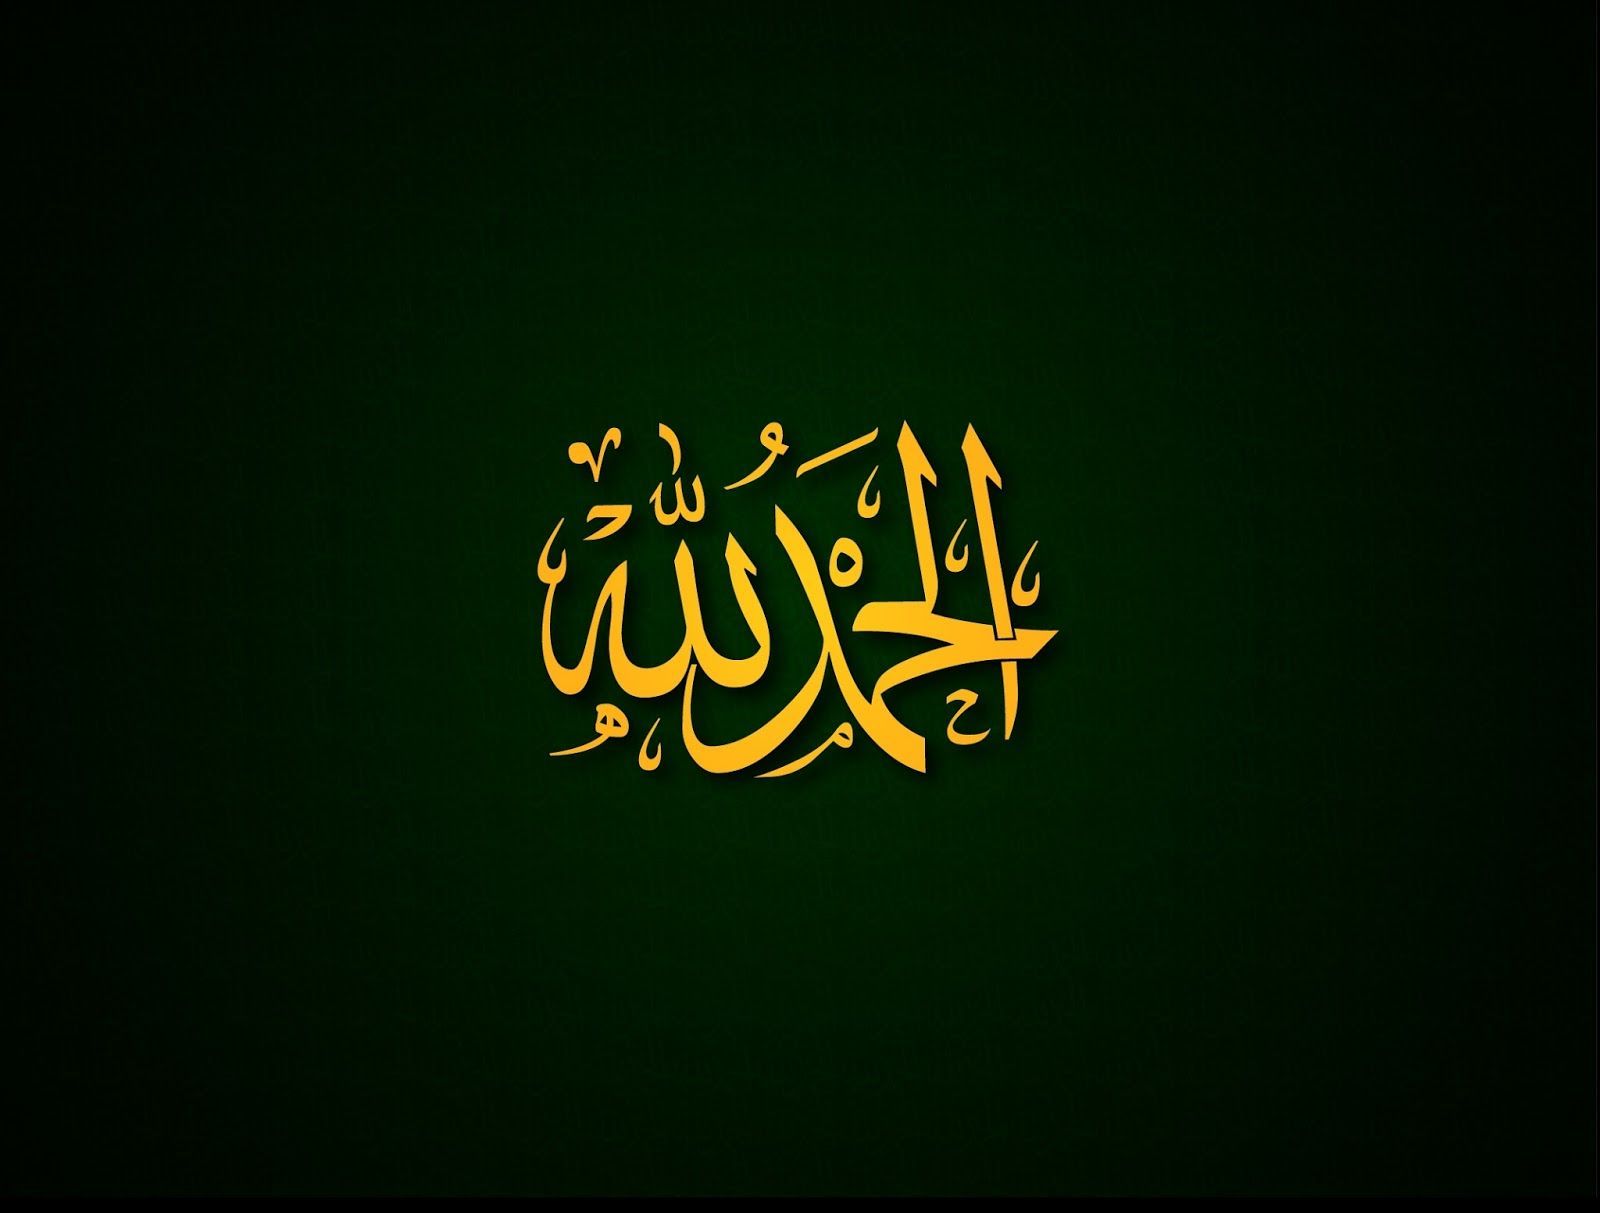 Islamic Calligraphy HD Wallpaper. Sunni Multimedia Urdu Islamic. Islamic calligraphy, Calligraphy, Calligraphy wallpaper